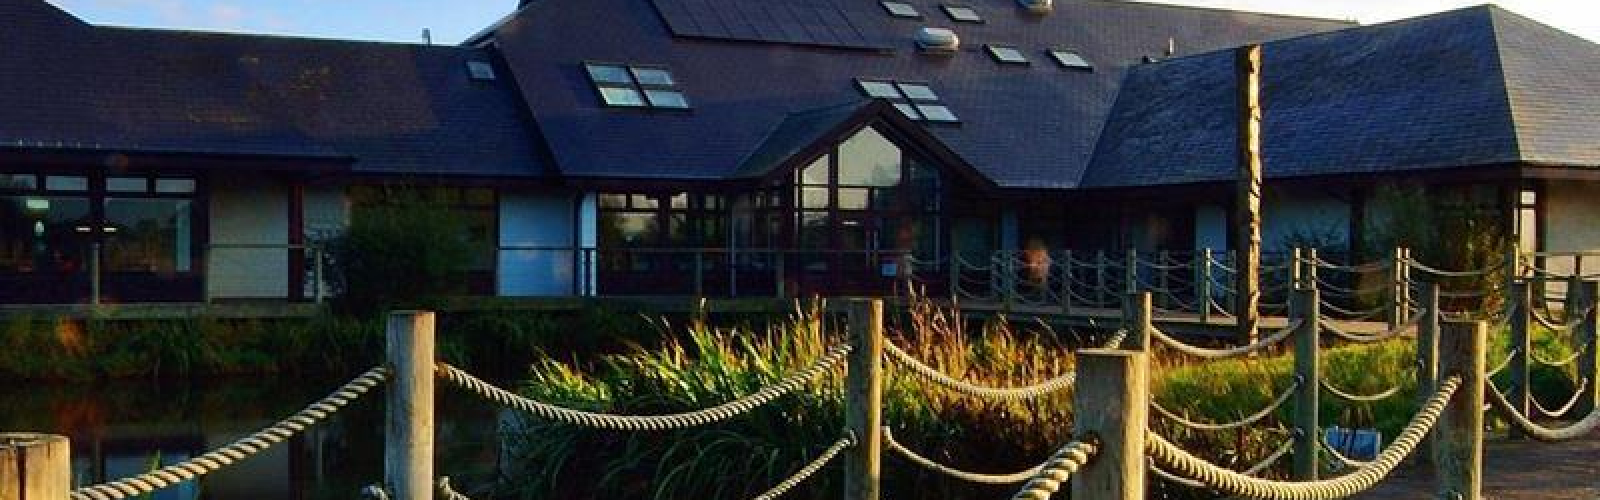 Lough Neagh Discovery Centre funded through Lough Neagh Partnership